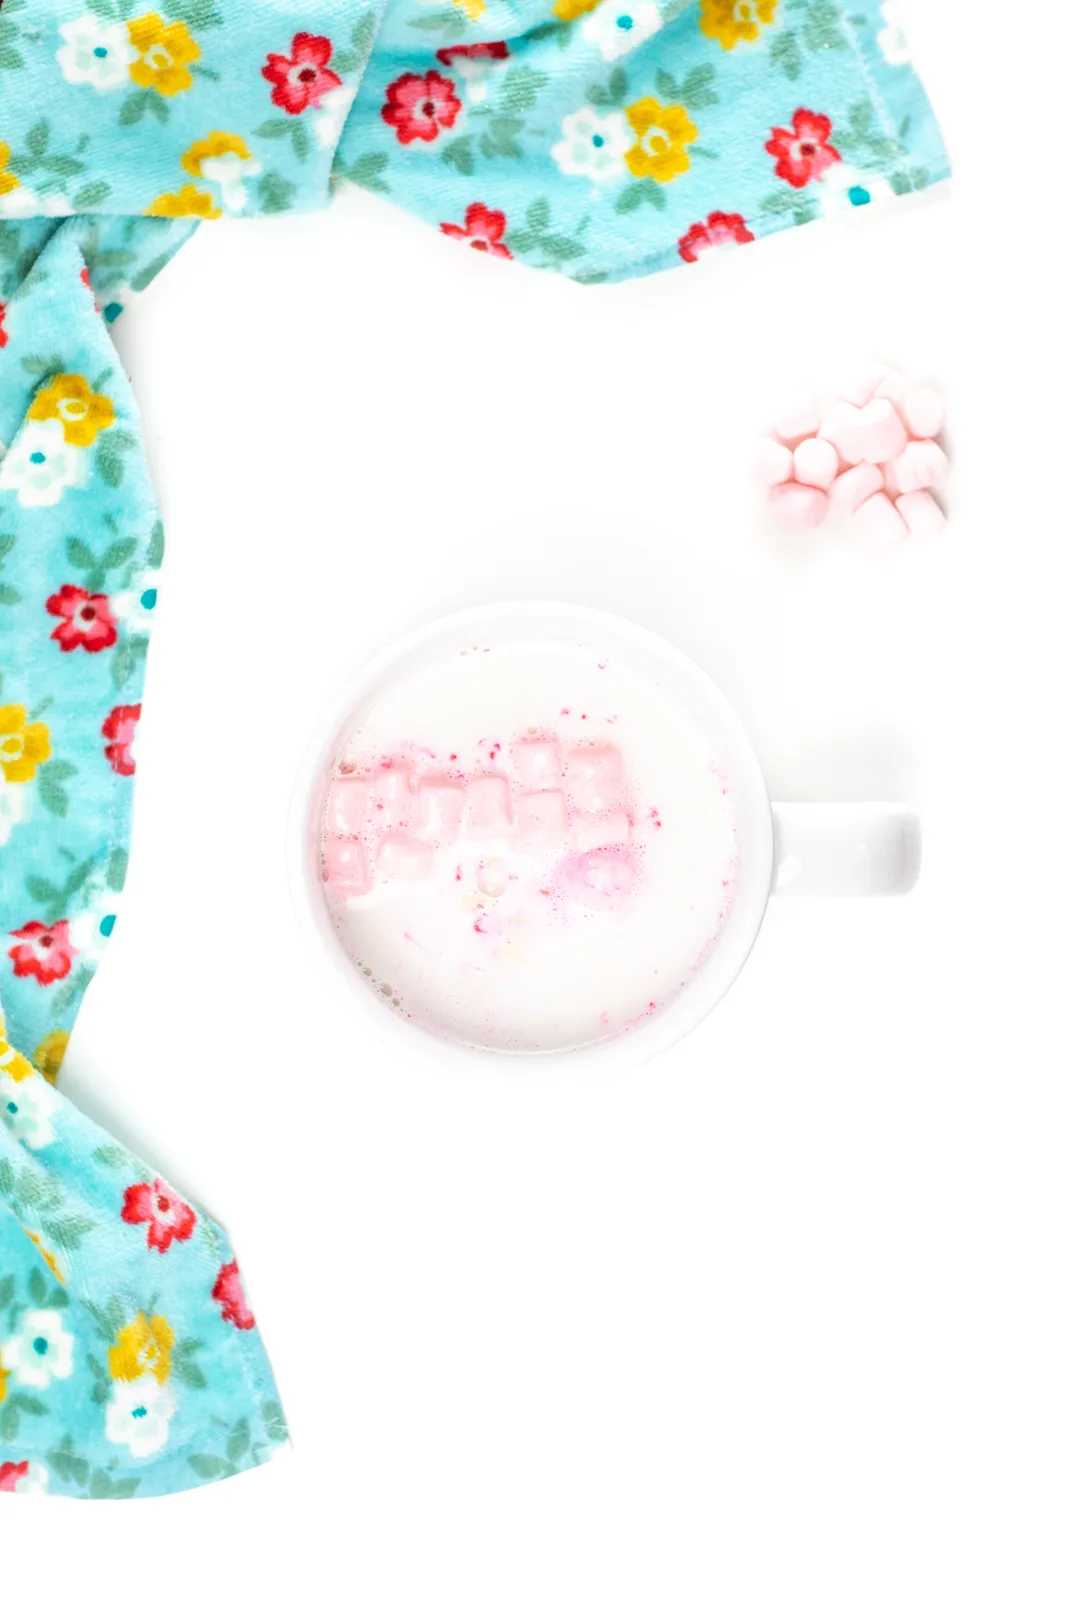 pink mini marshmallows floating in a mug